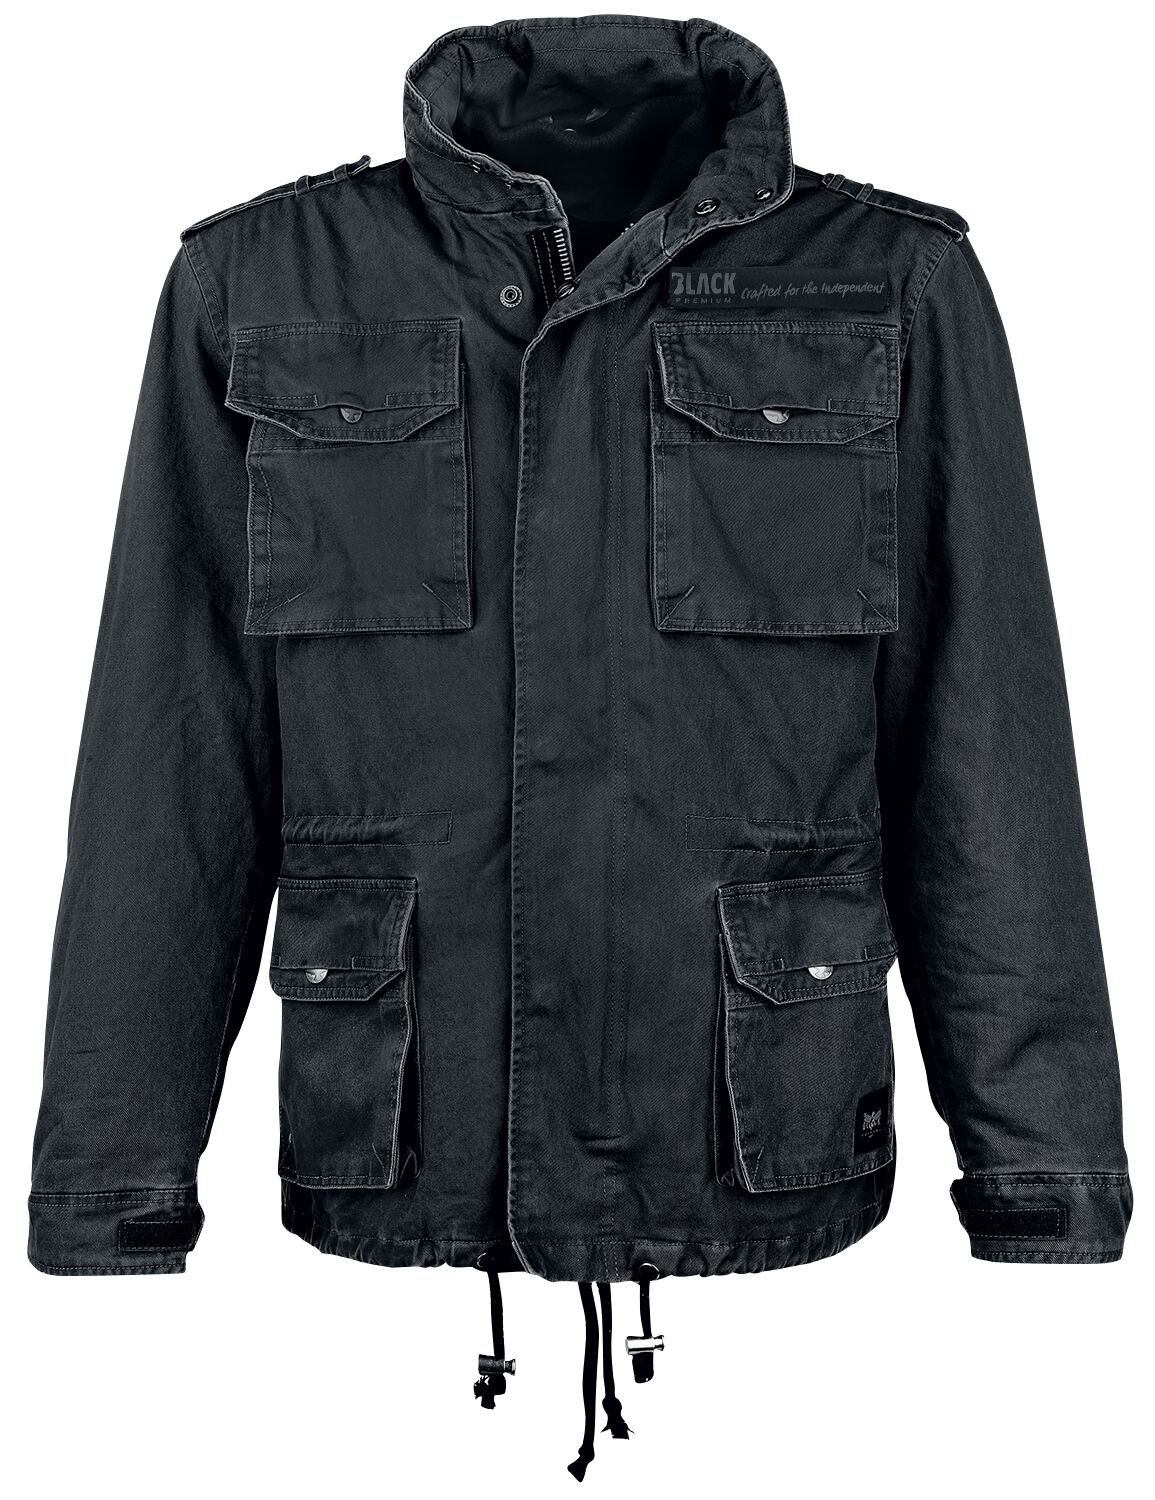 Black Premium by EMP Army Field Jacket Winterjacke schwarz in XXL von Black Premium by EMP